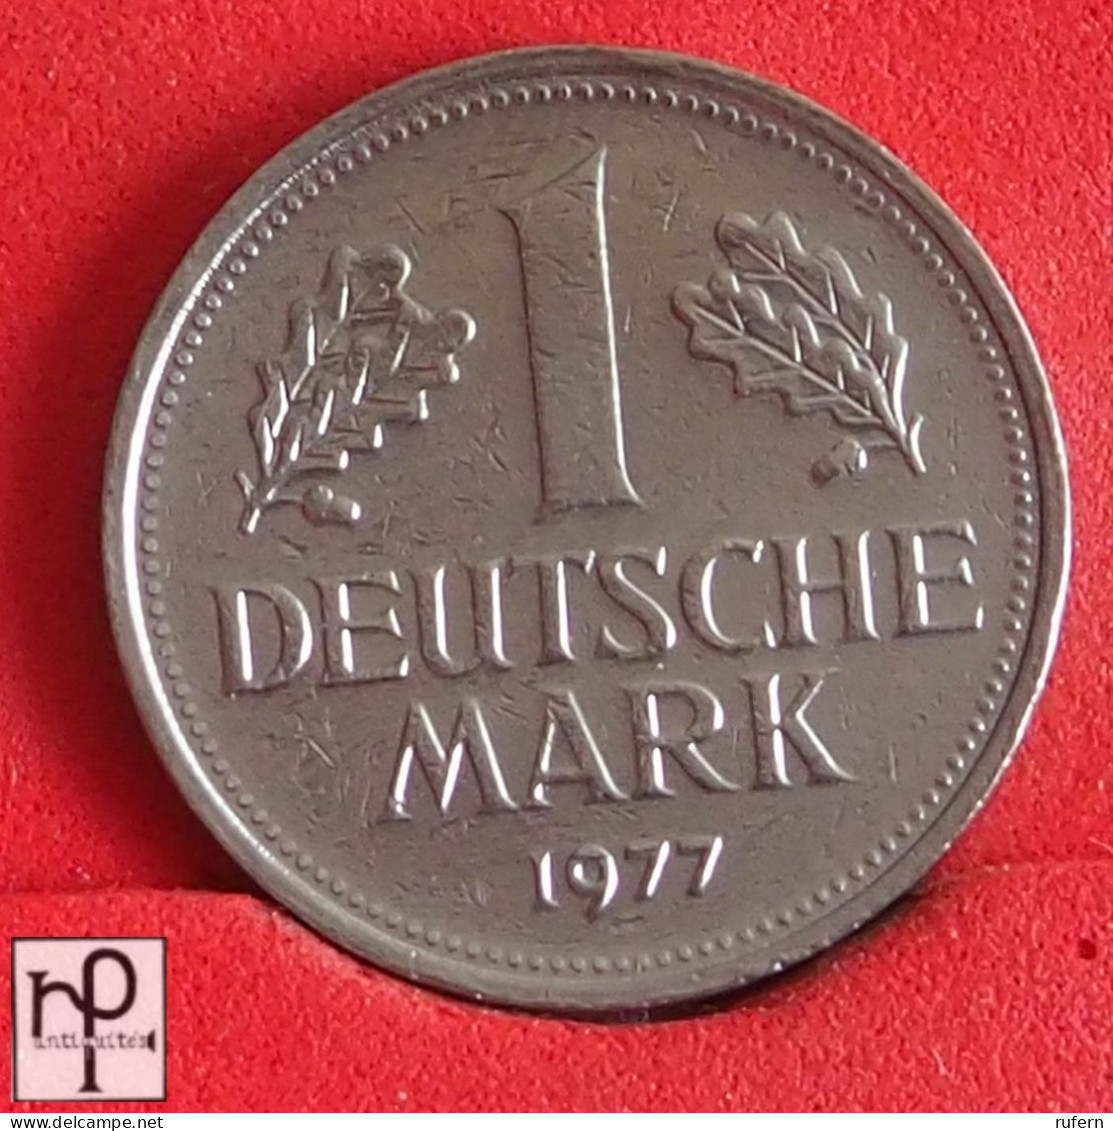 GERMANY 1 MARK 1977 F -    KM# 110 - (Nº55099) - 1 Mark